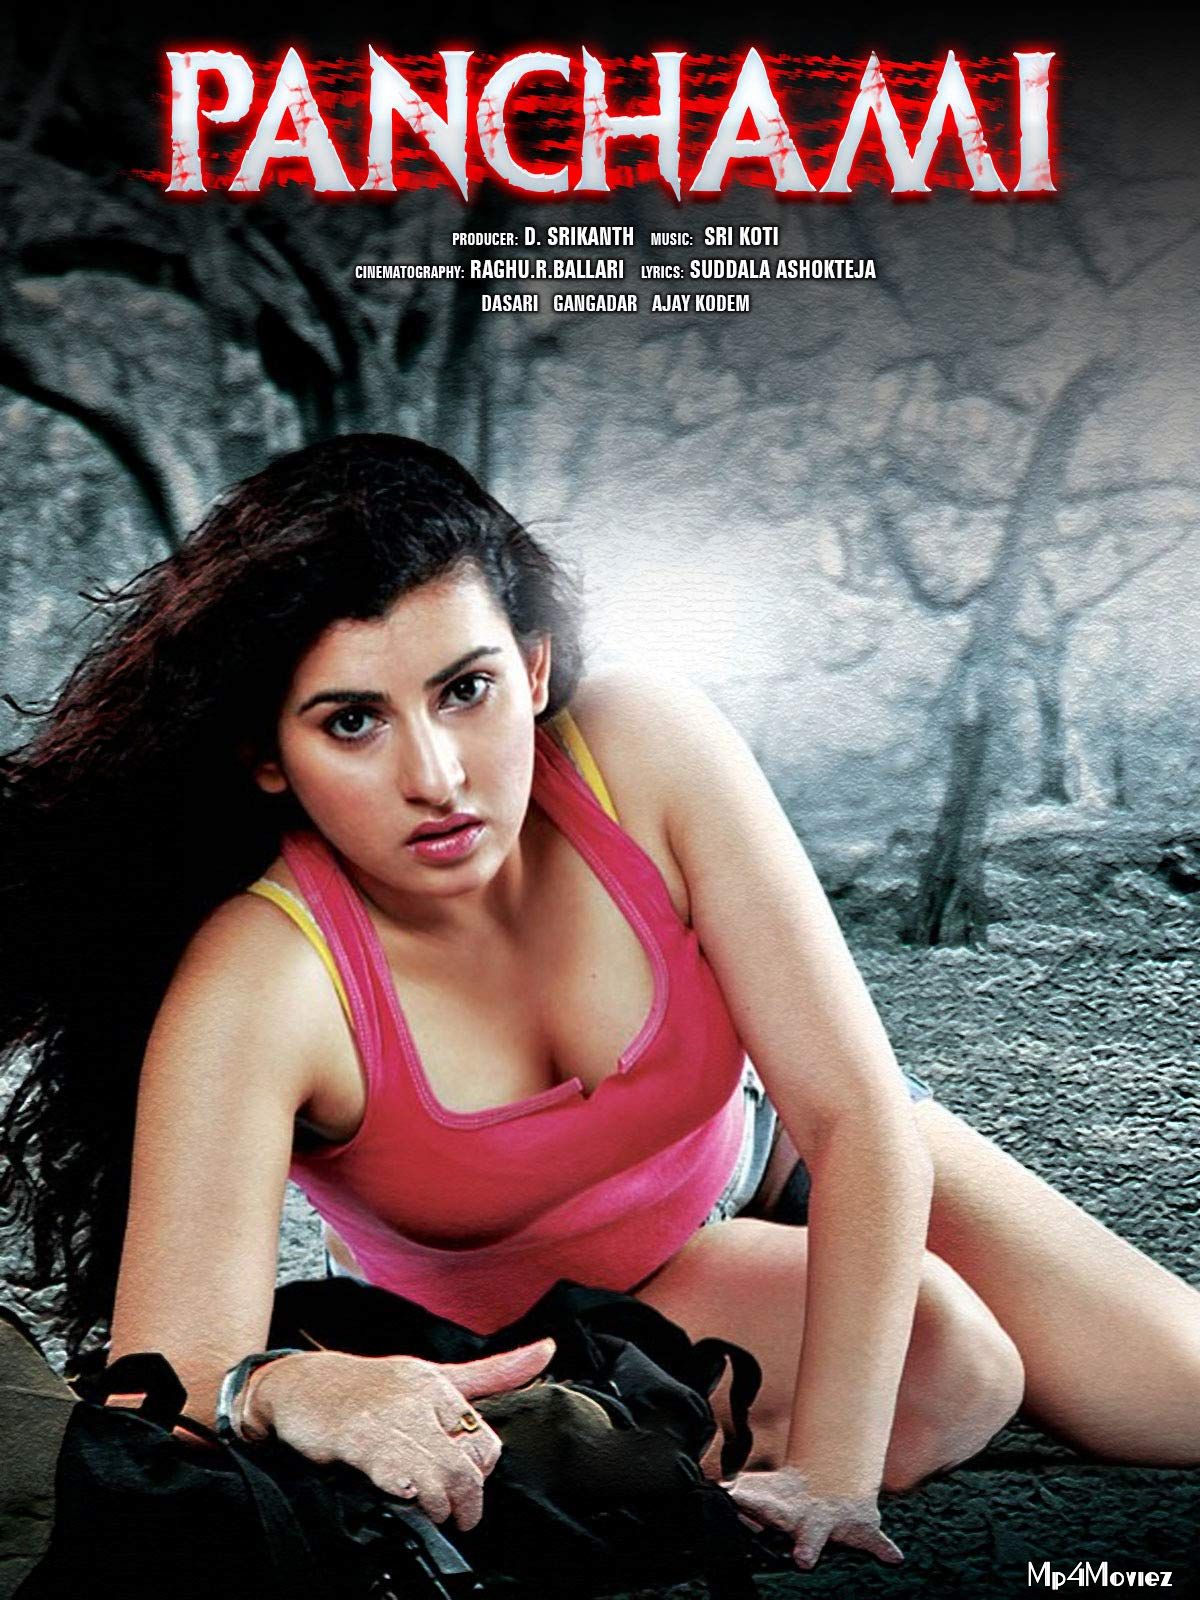 Panchami 2020 Hindi Dubbed Full Movie download full movie